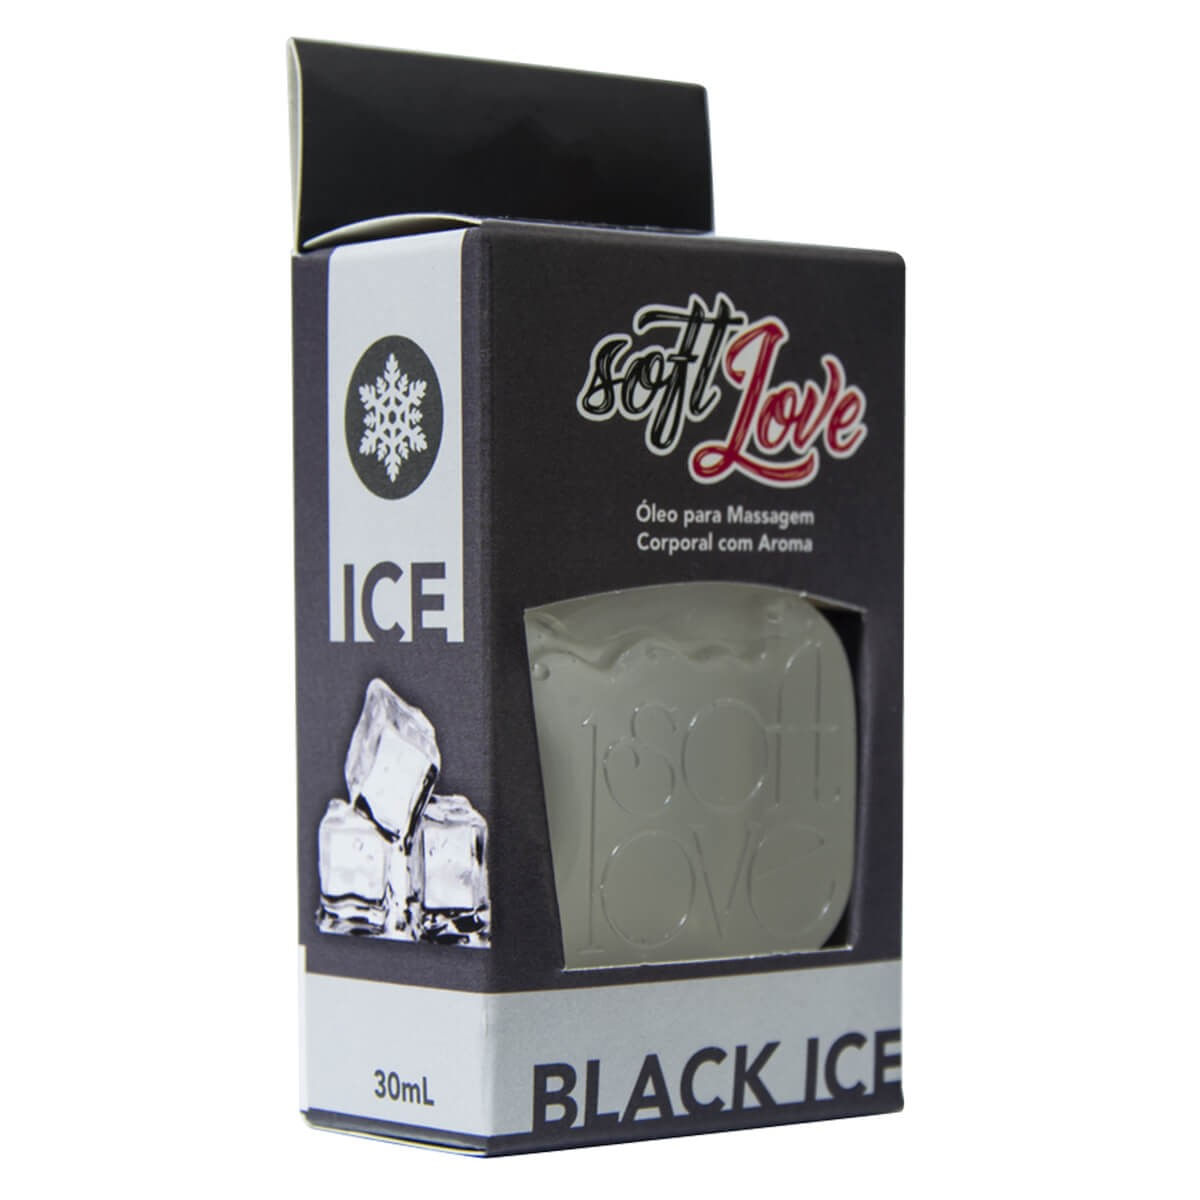 Soft Love Black Ice 30ml Gel Umidificante Corporal com Aroma